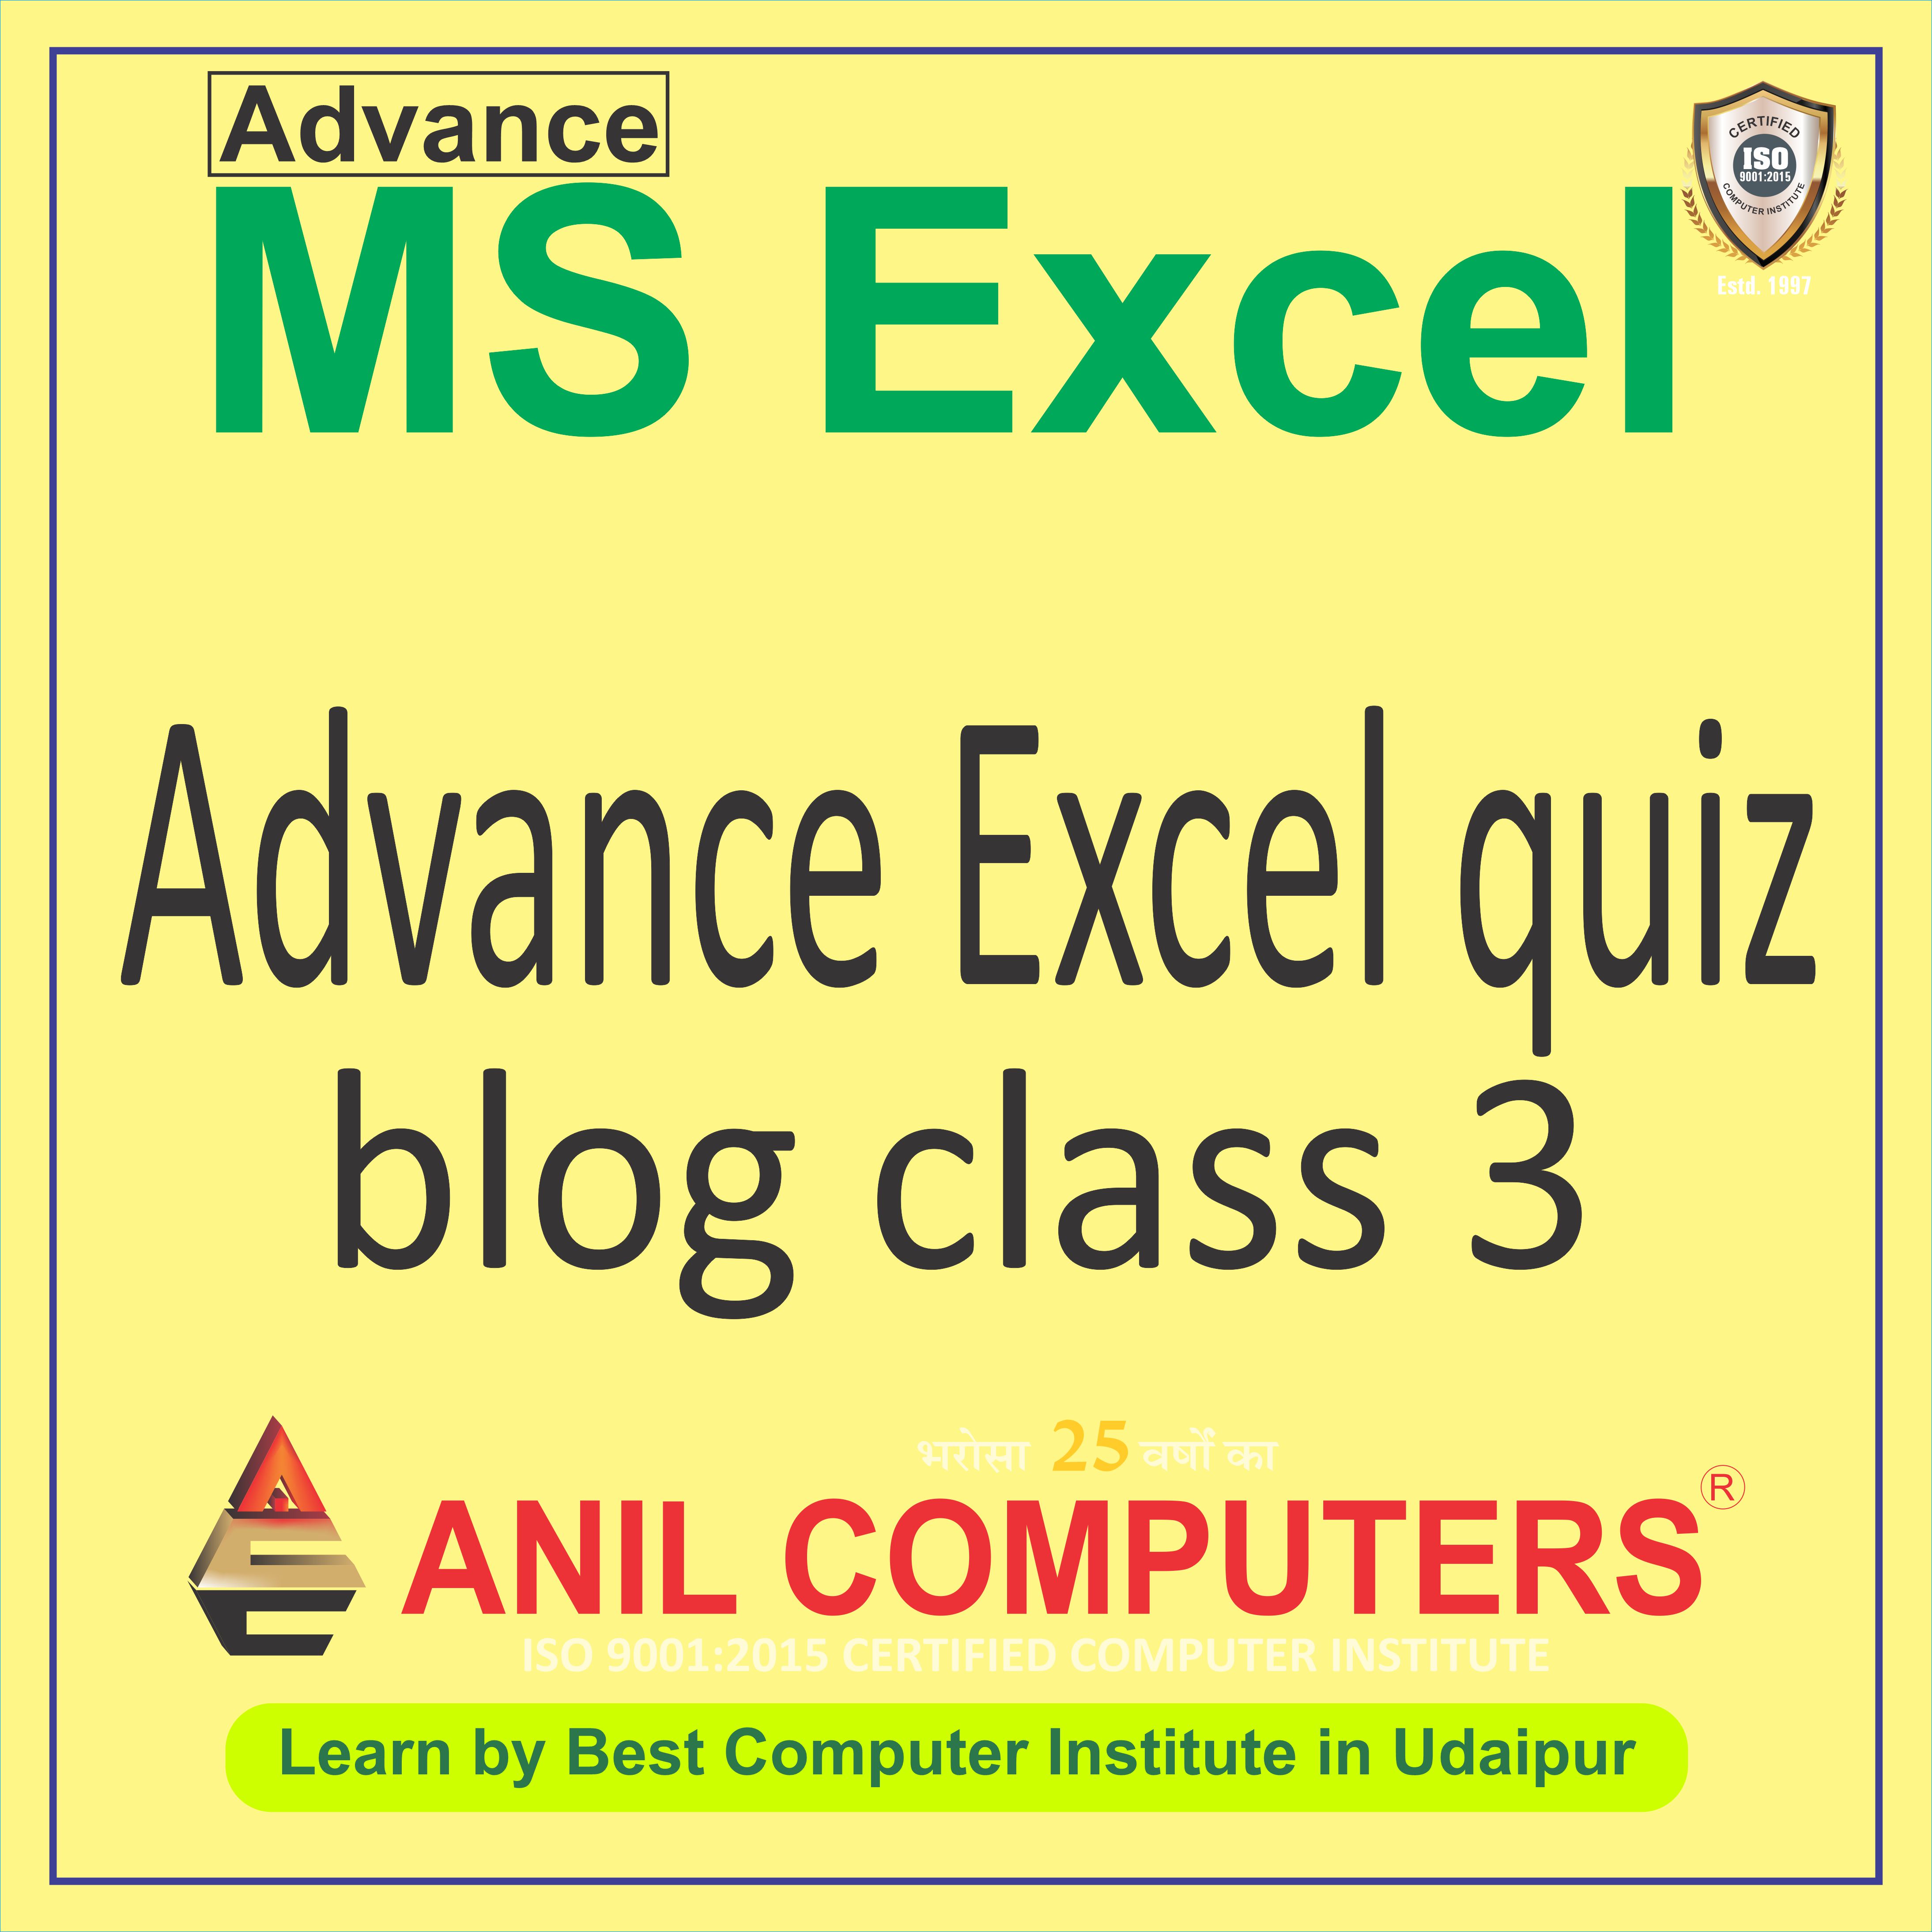 Advance Excel quiz blog class 3